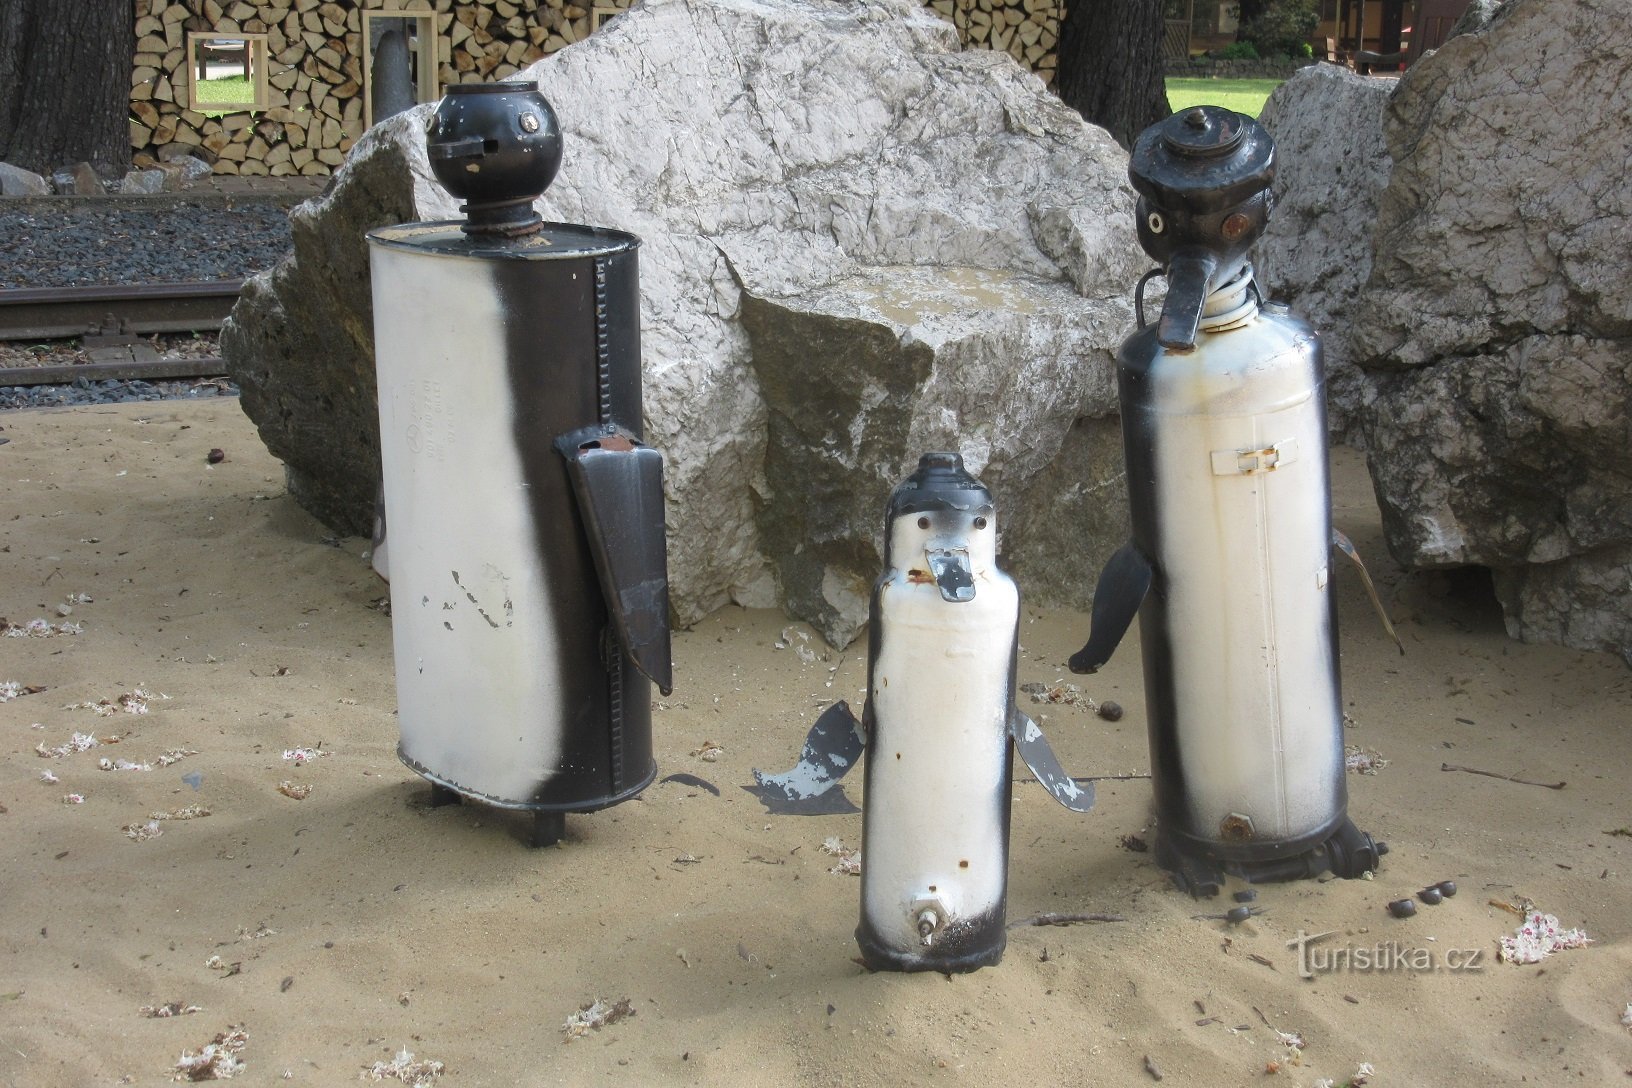 Pingouins en métal